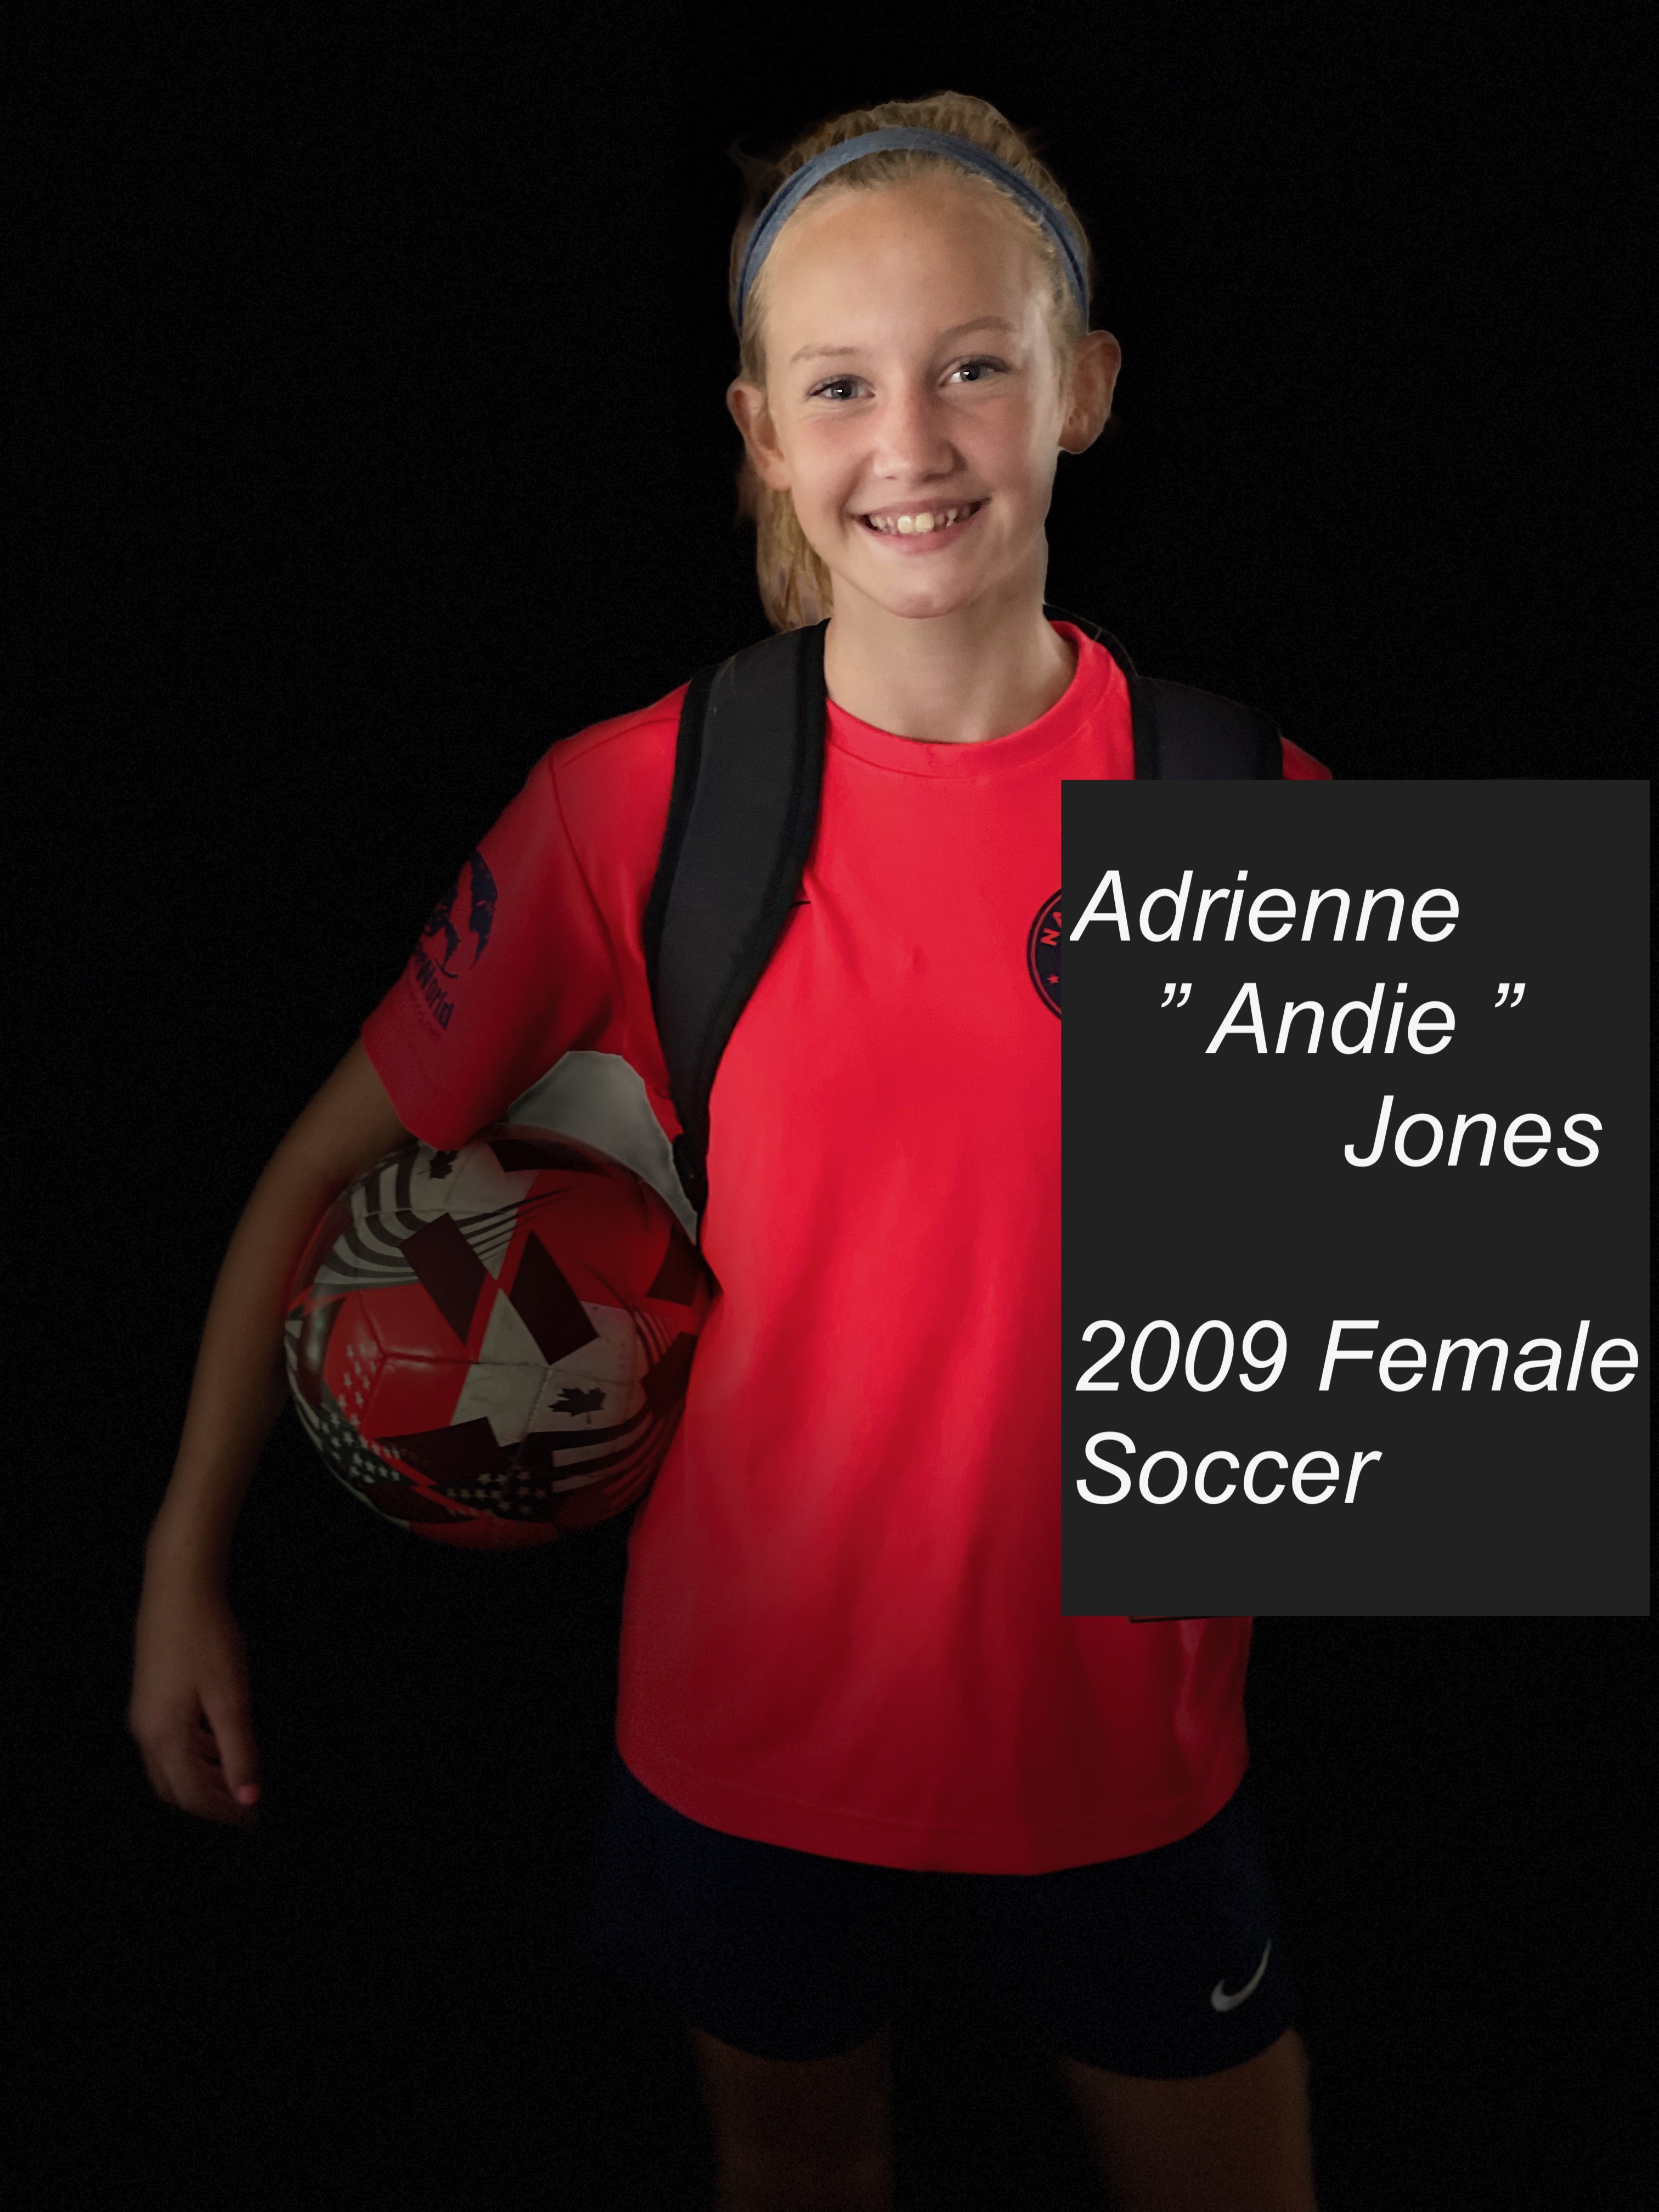 Adrienne Jones